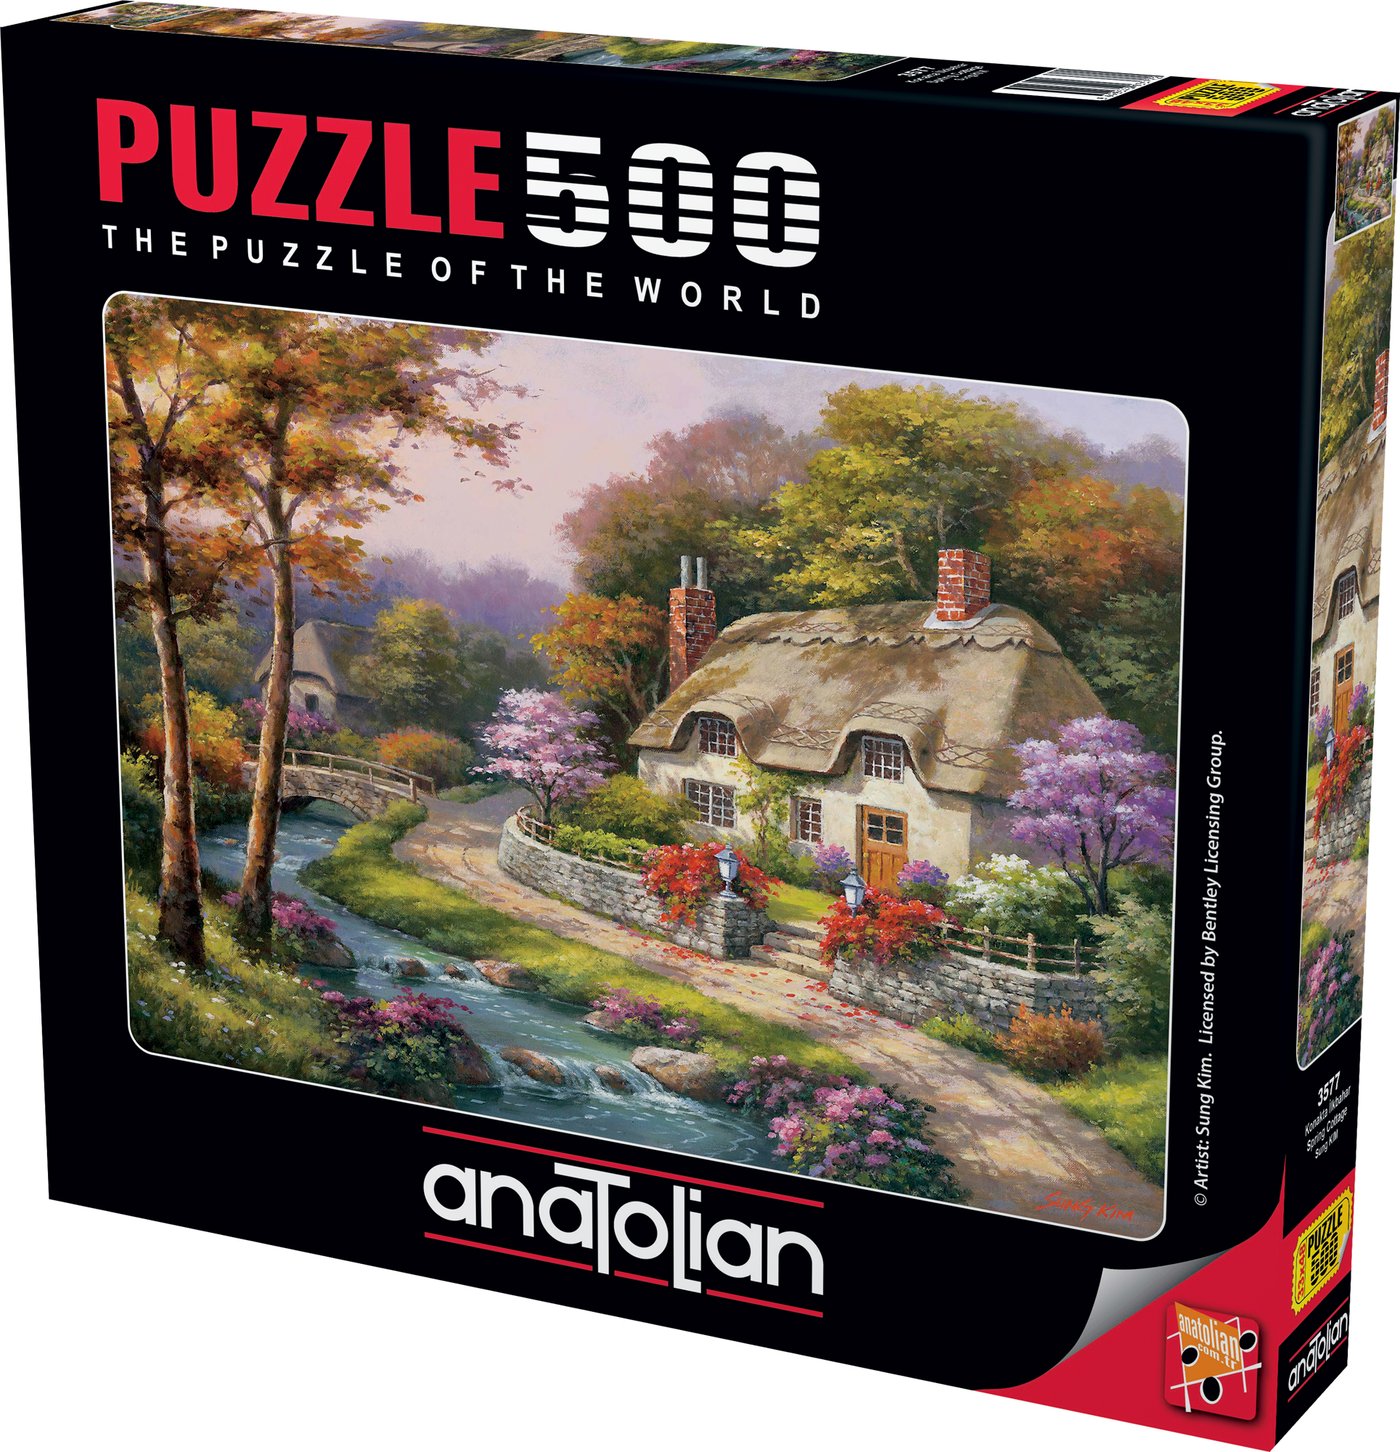 Puzzle 500. Spring Cottage